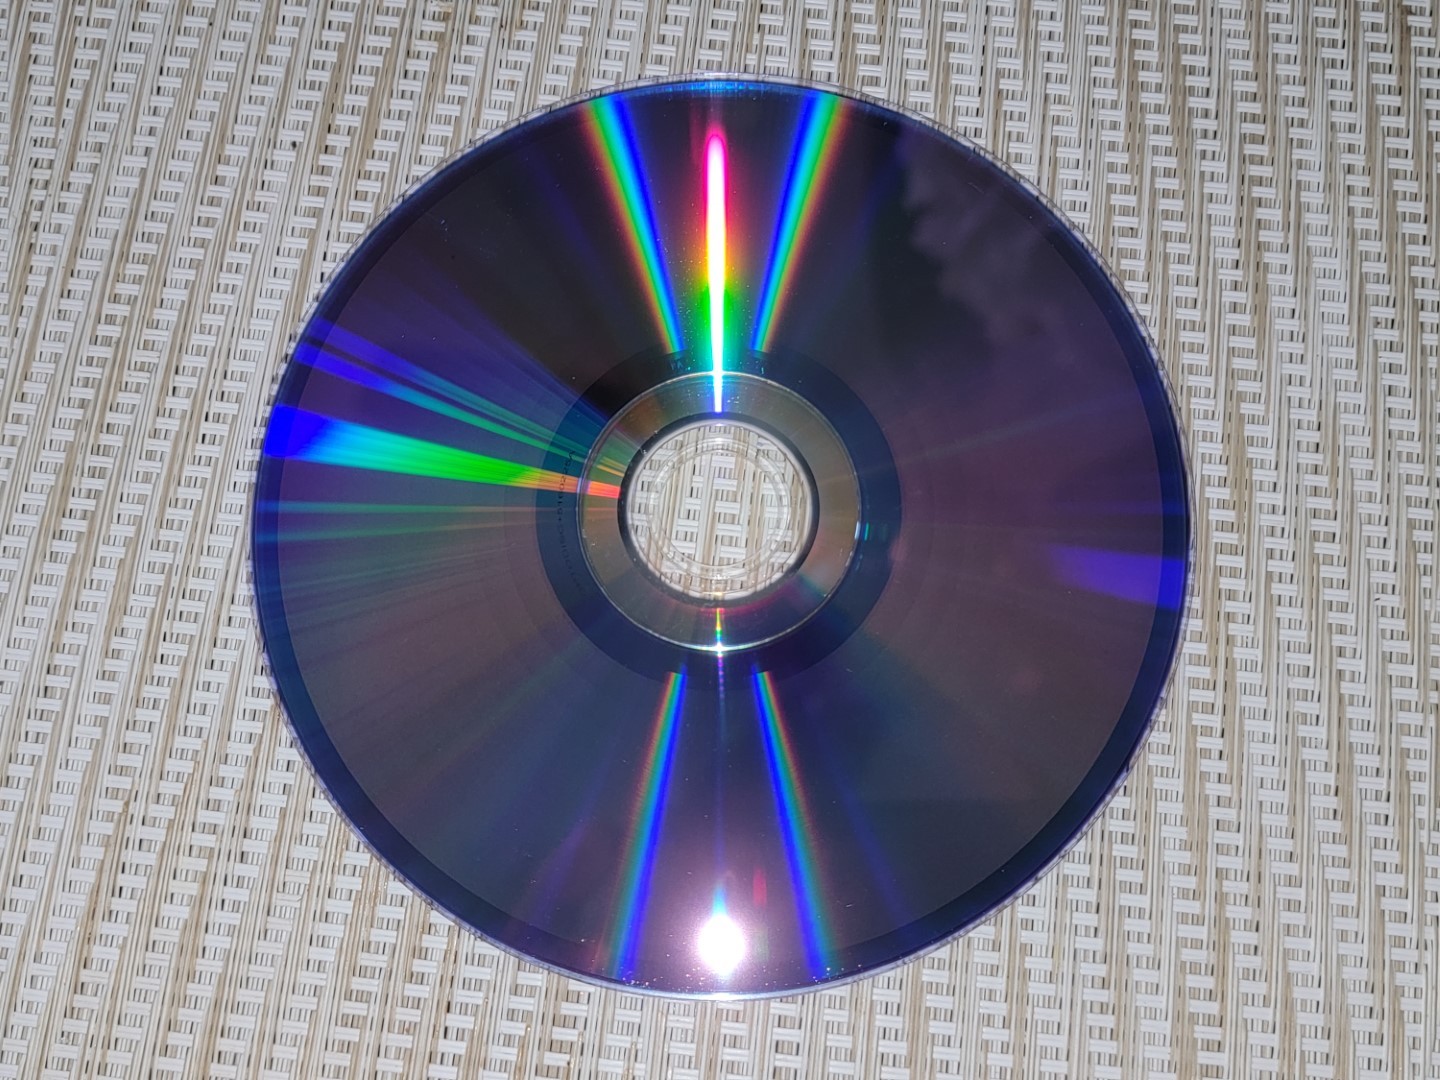 PlexDisc DVD+R Burned in LG BP60NB10 v1.02 2.4x